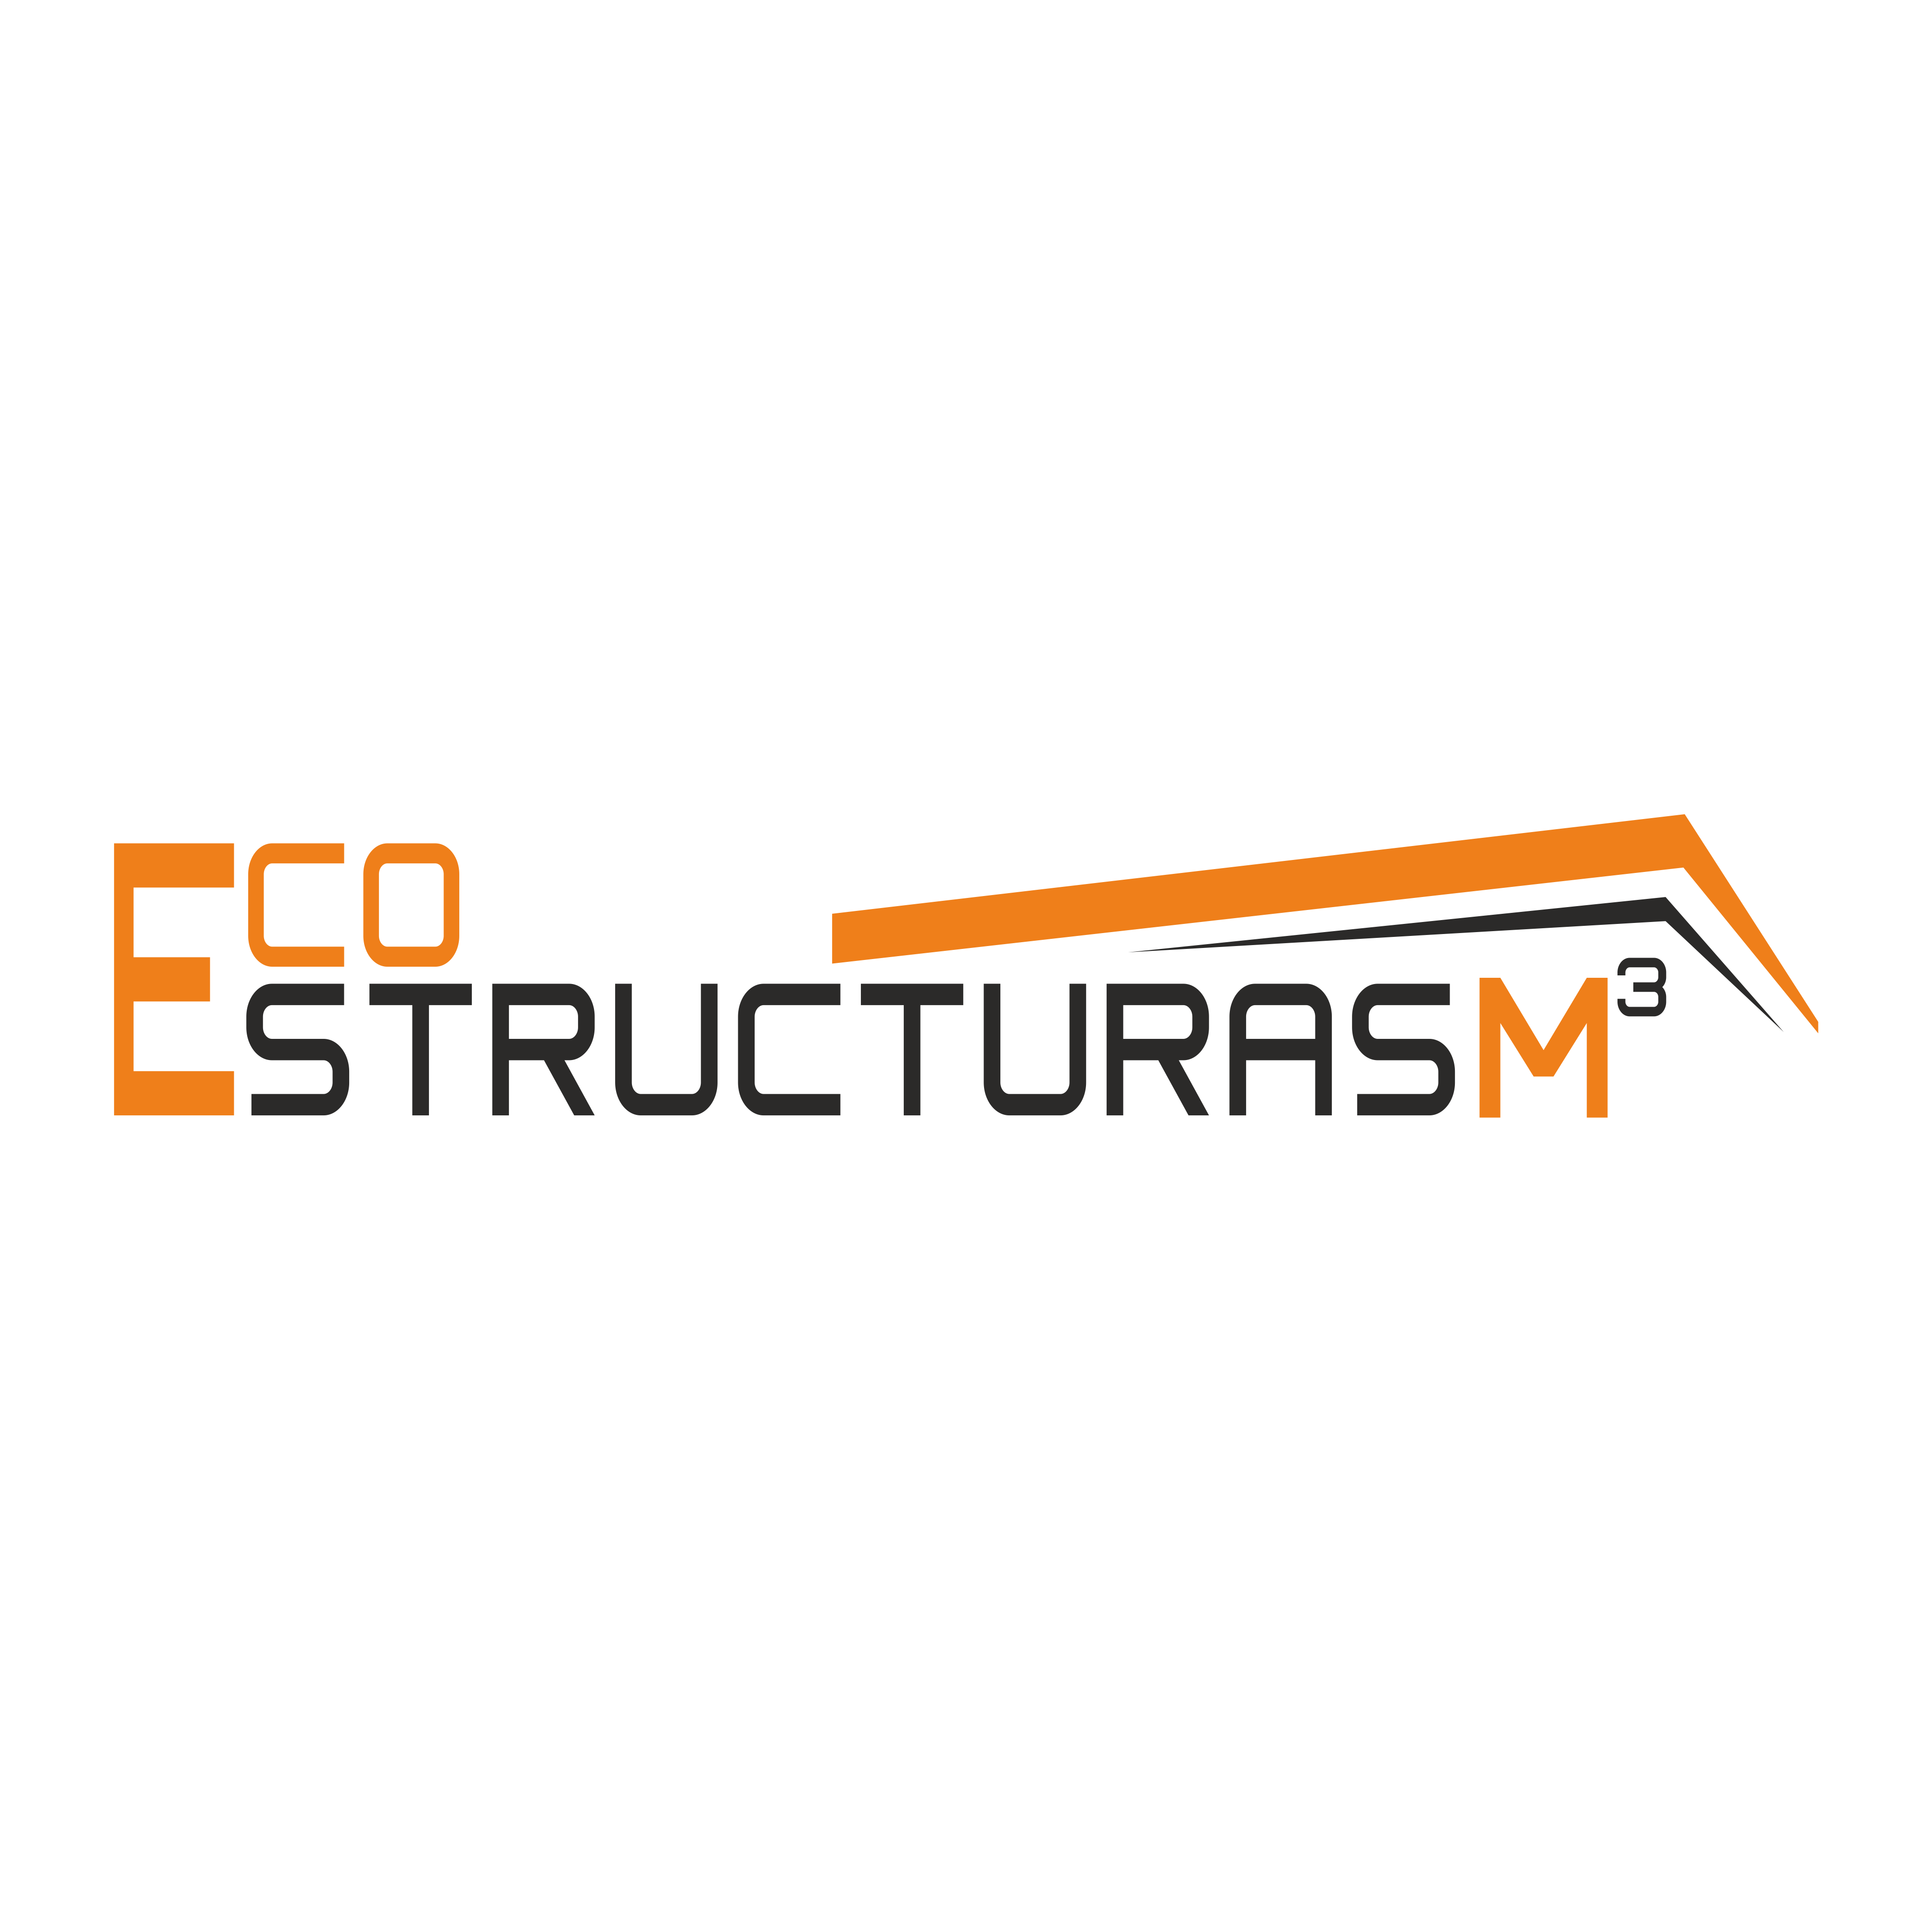 Eco Estructuras M3 Logo